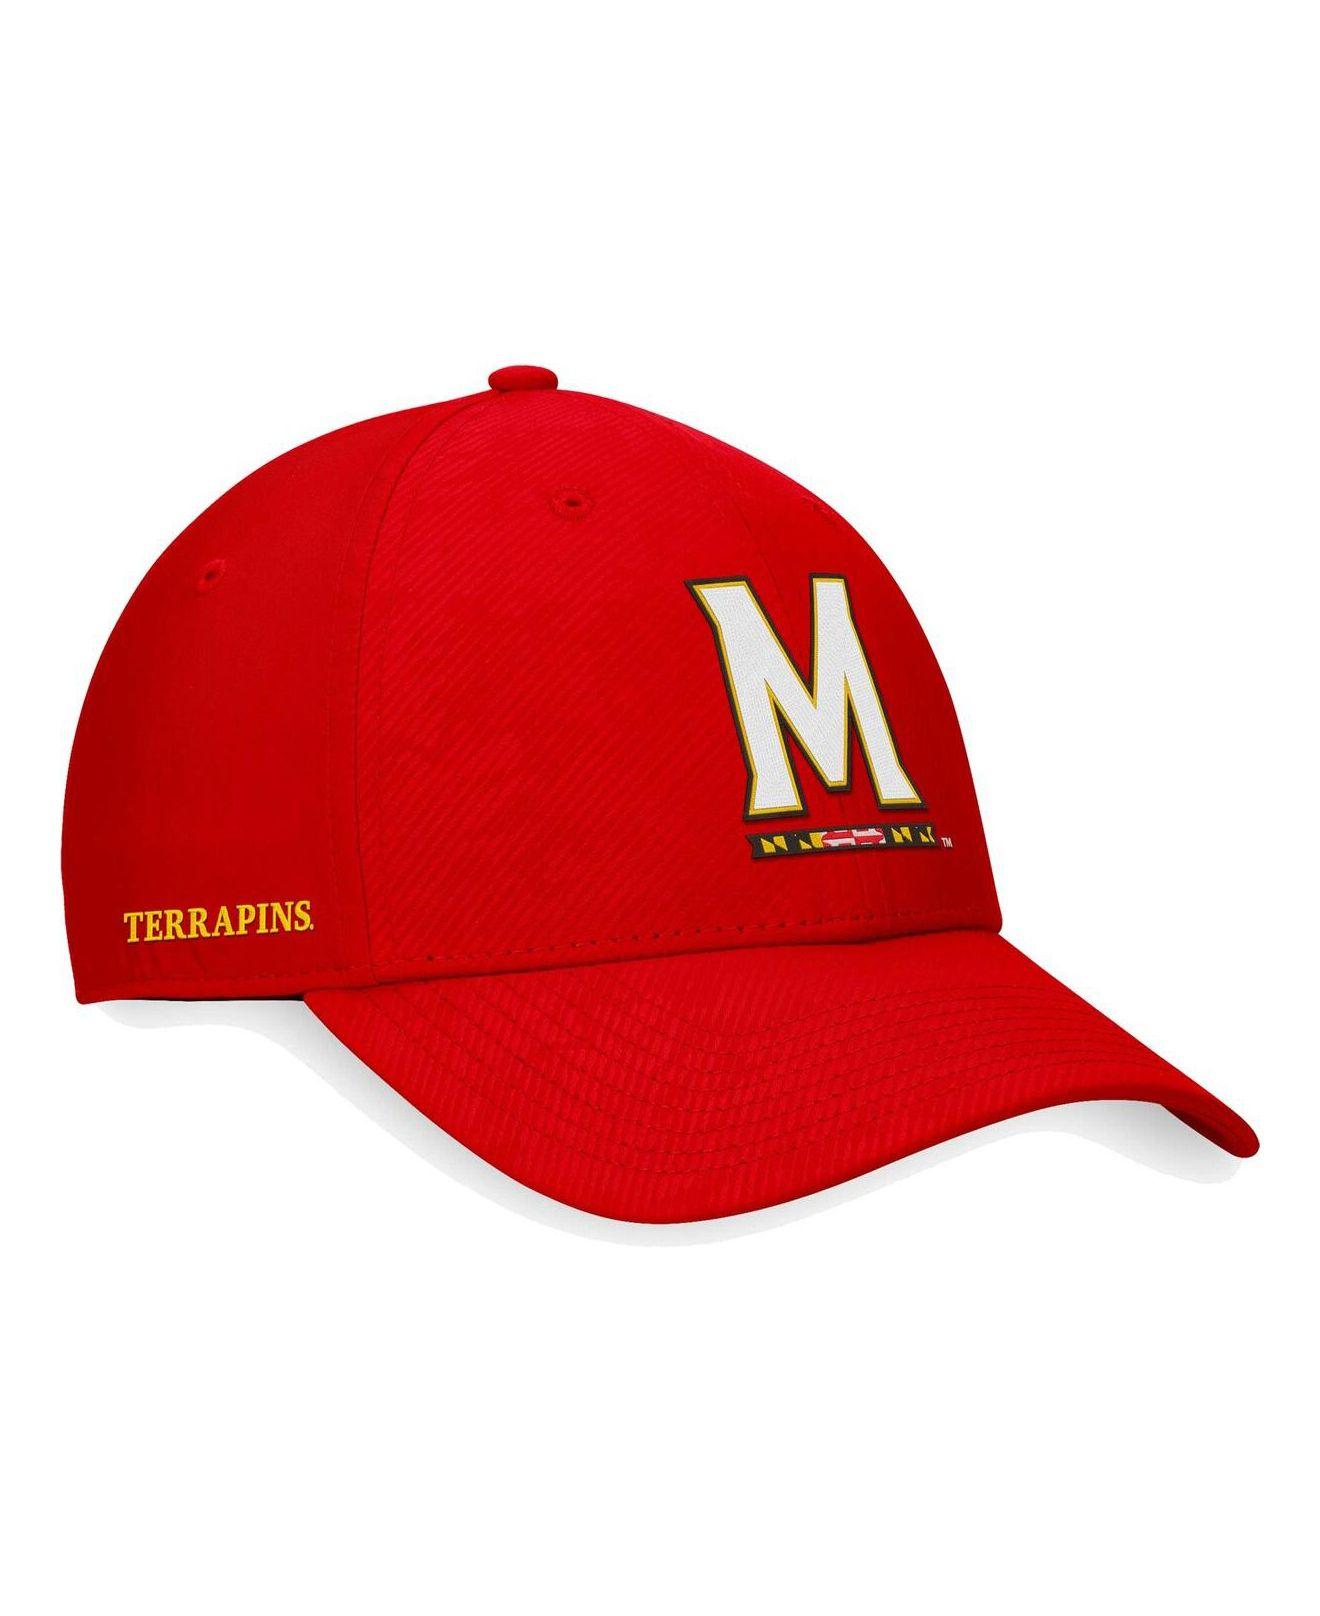 Men's Top of The World Red Louisville Cardinals Slice Adjustable Hat